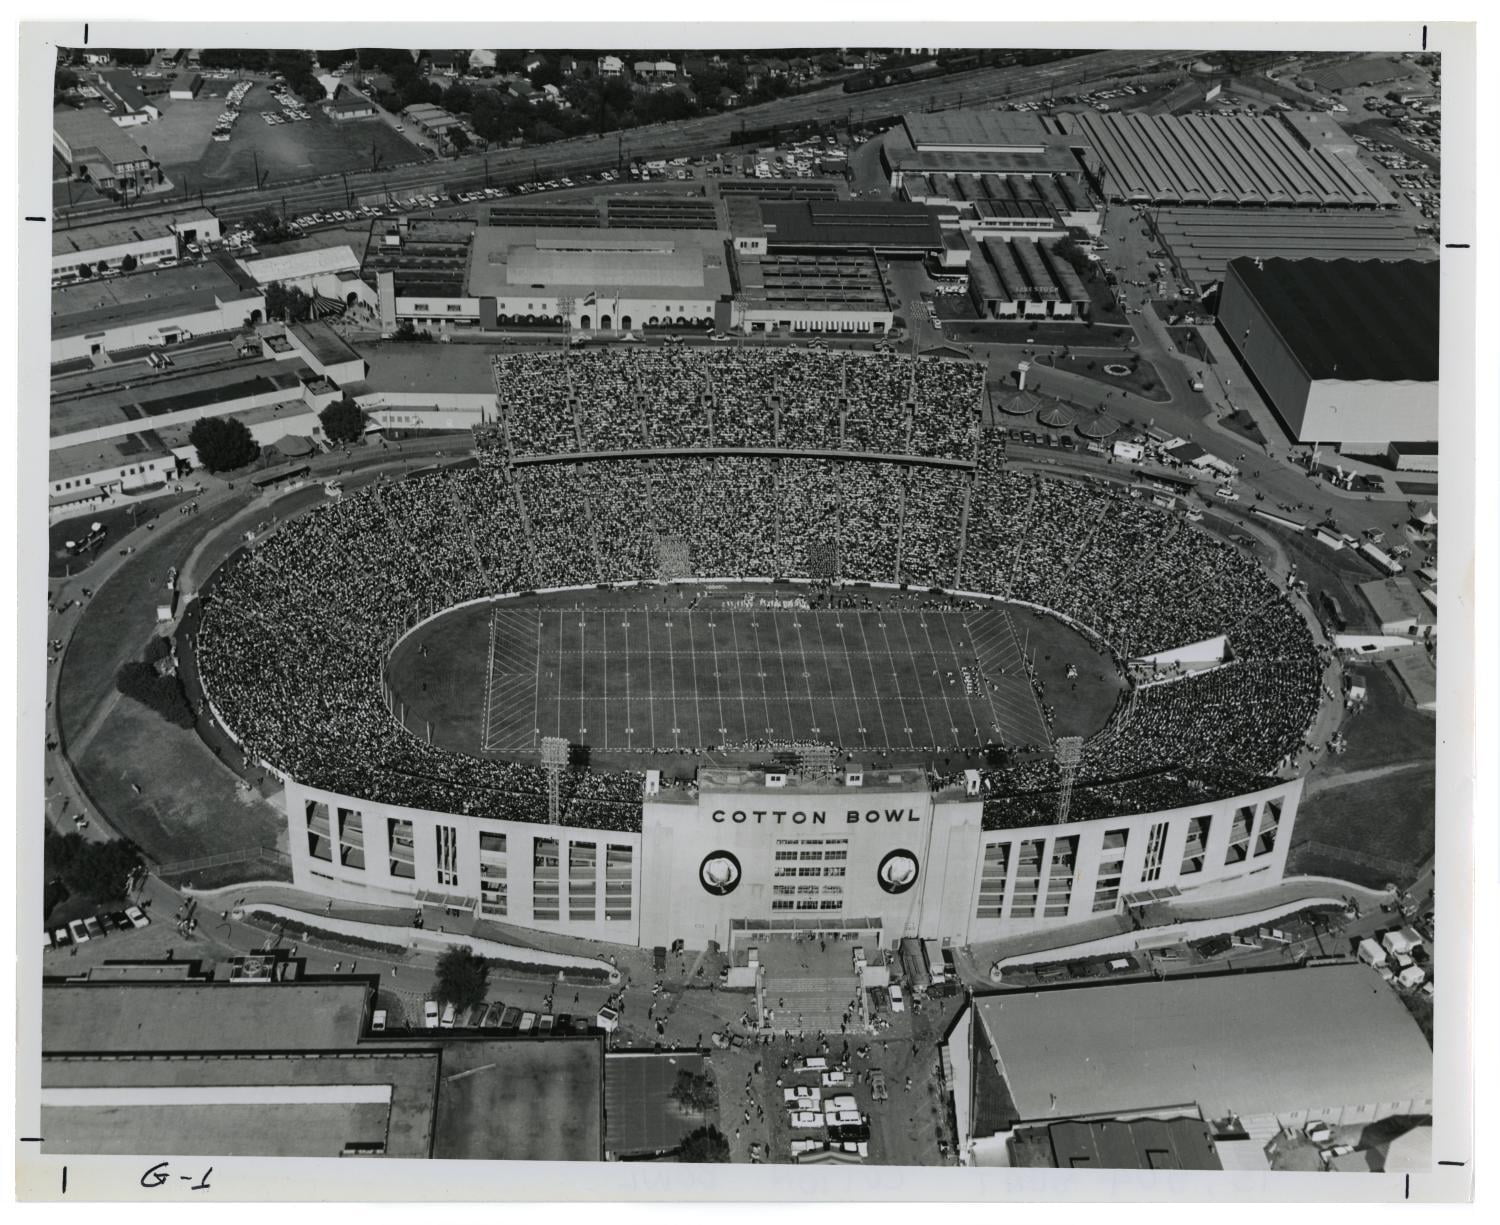 The famous Cotton Bowl in Dallas, TX